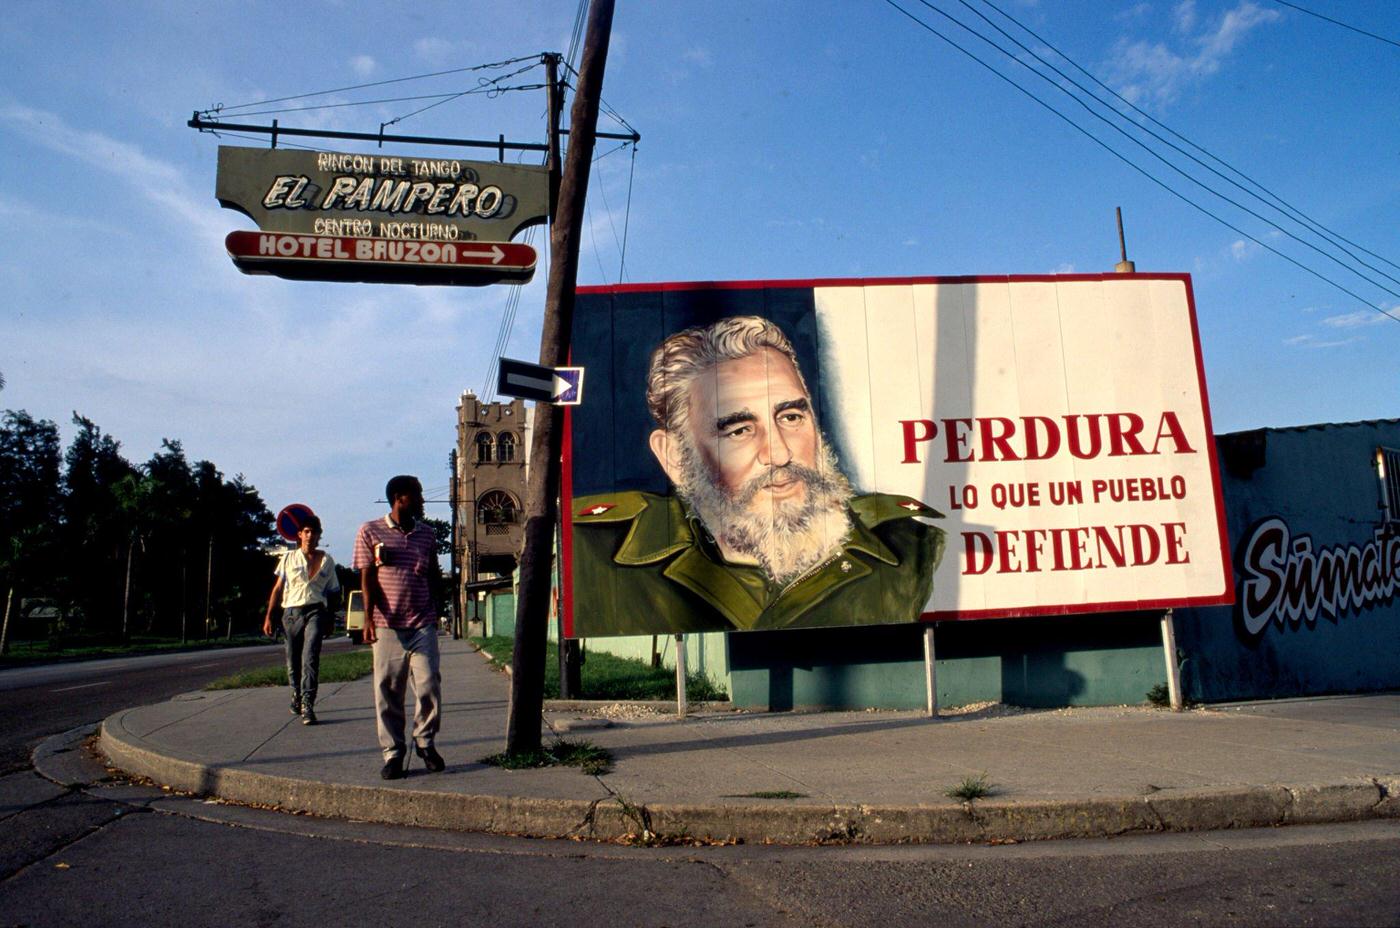 Images of Fidel Castro appearing on billboards in Havana, Cuba, 1991.